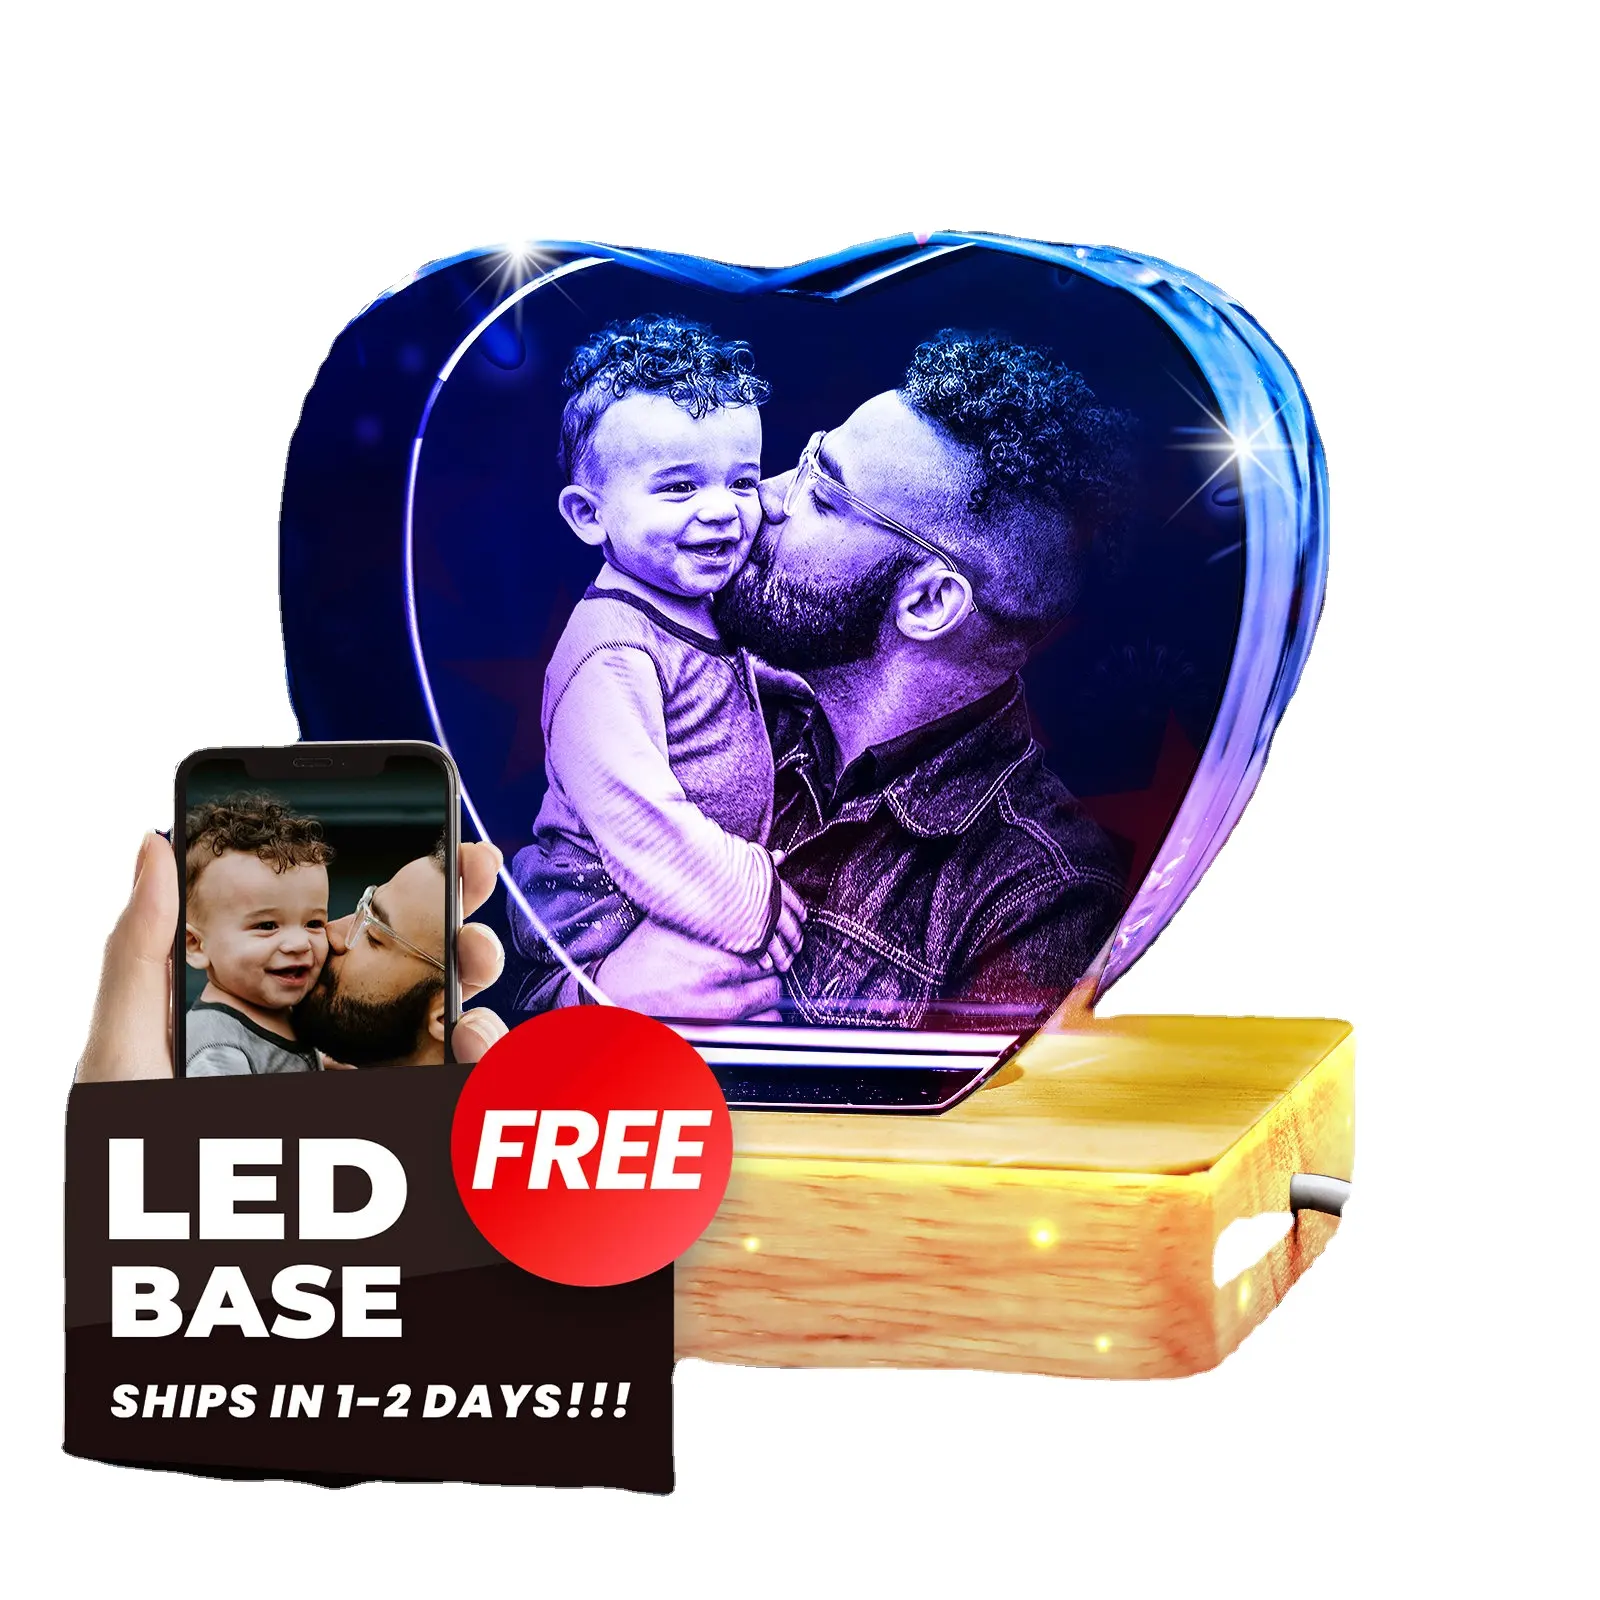 Marco de fotos de cristal 3D Base LED gratis Imagen grabada con láser personalizada Papá Mamá Mujeres Aniversario Medalla de trofeo de cristal grabada